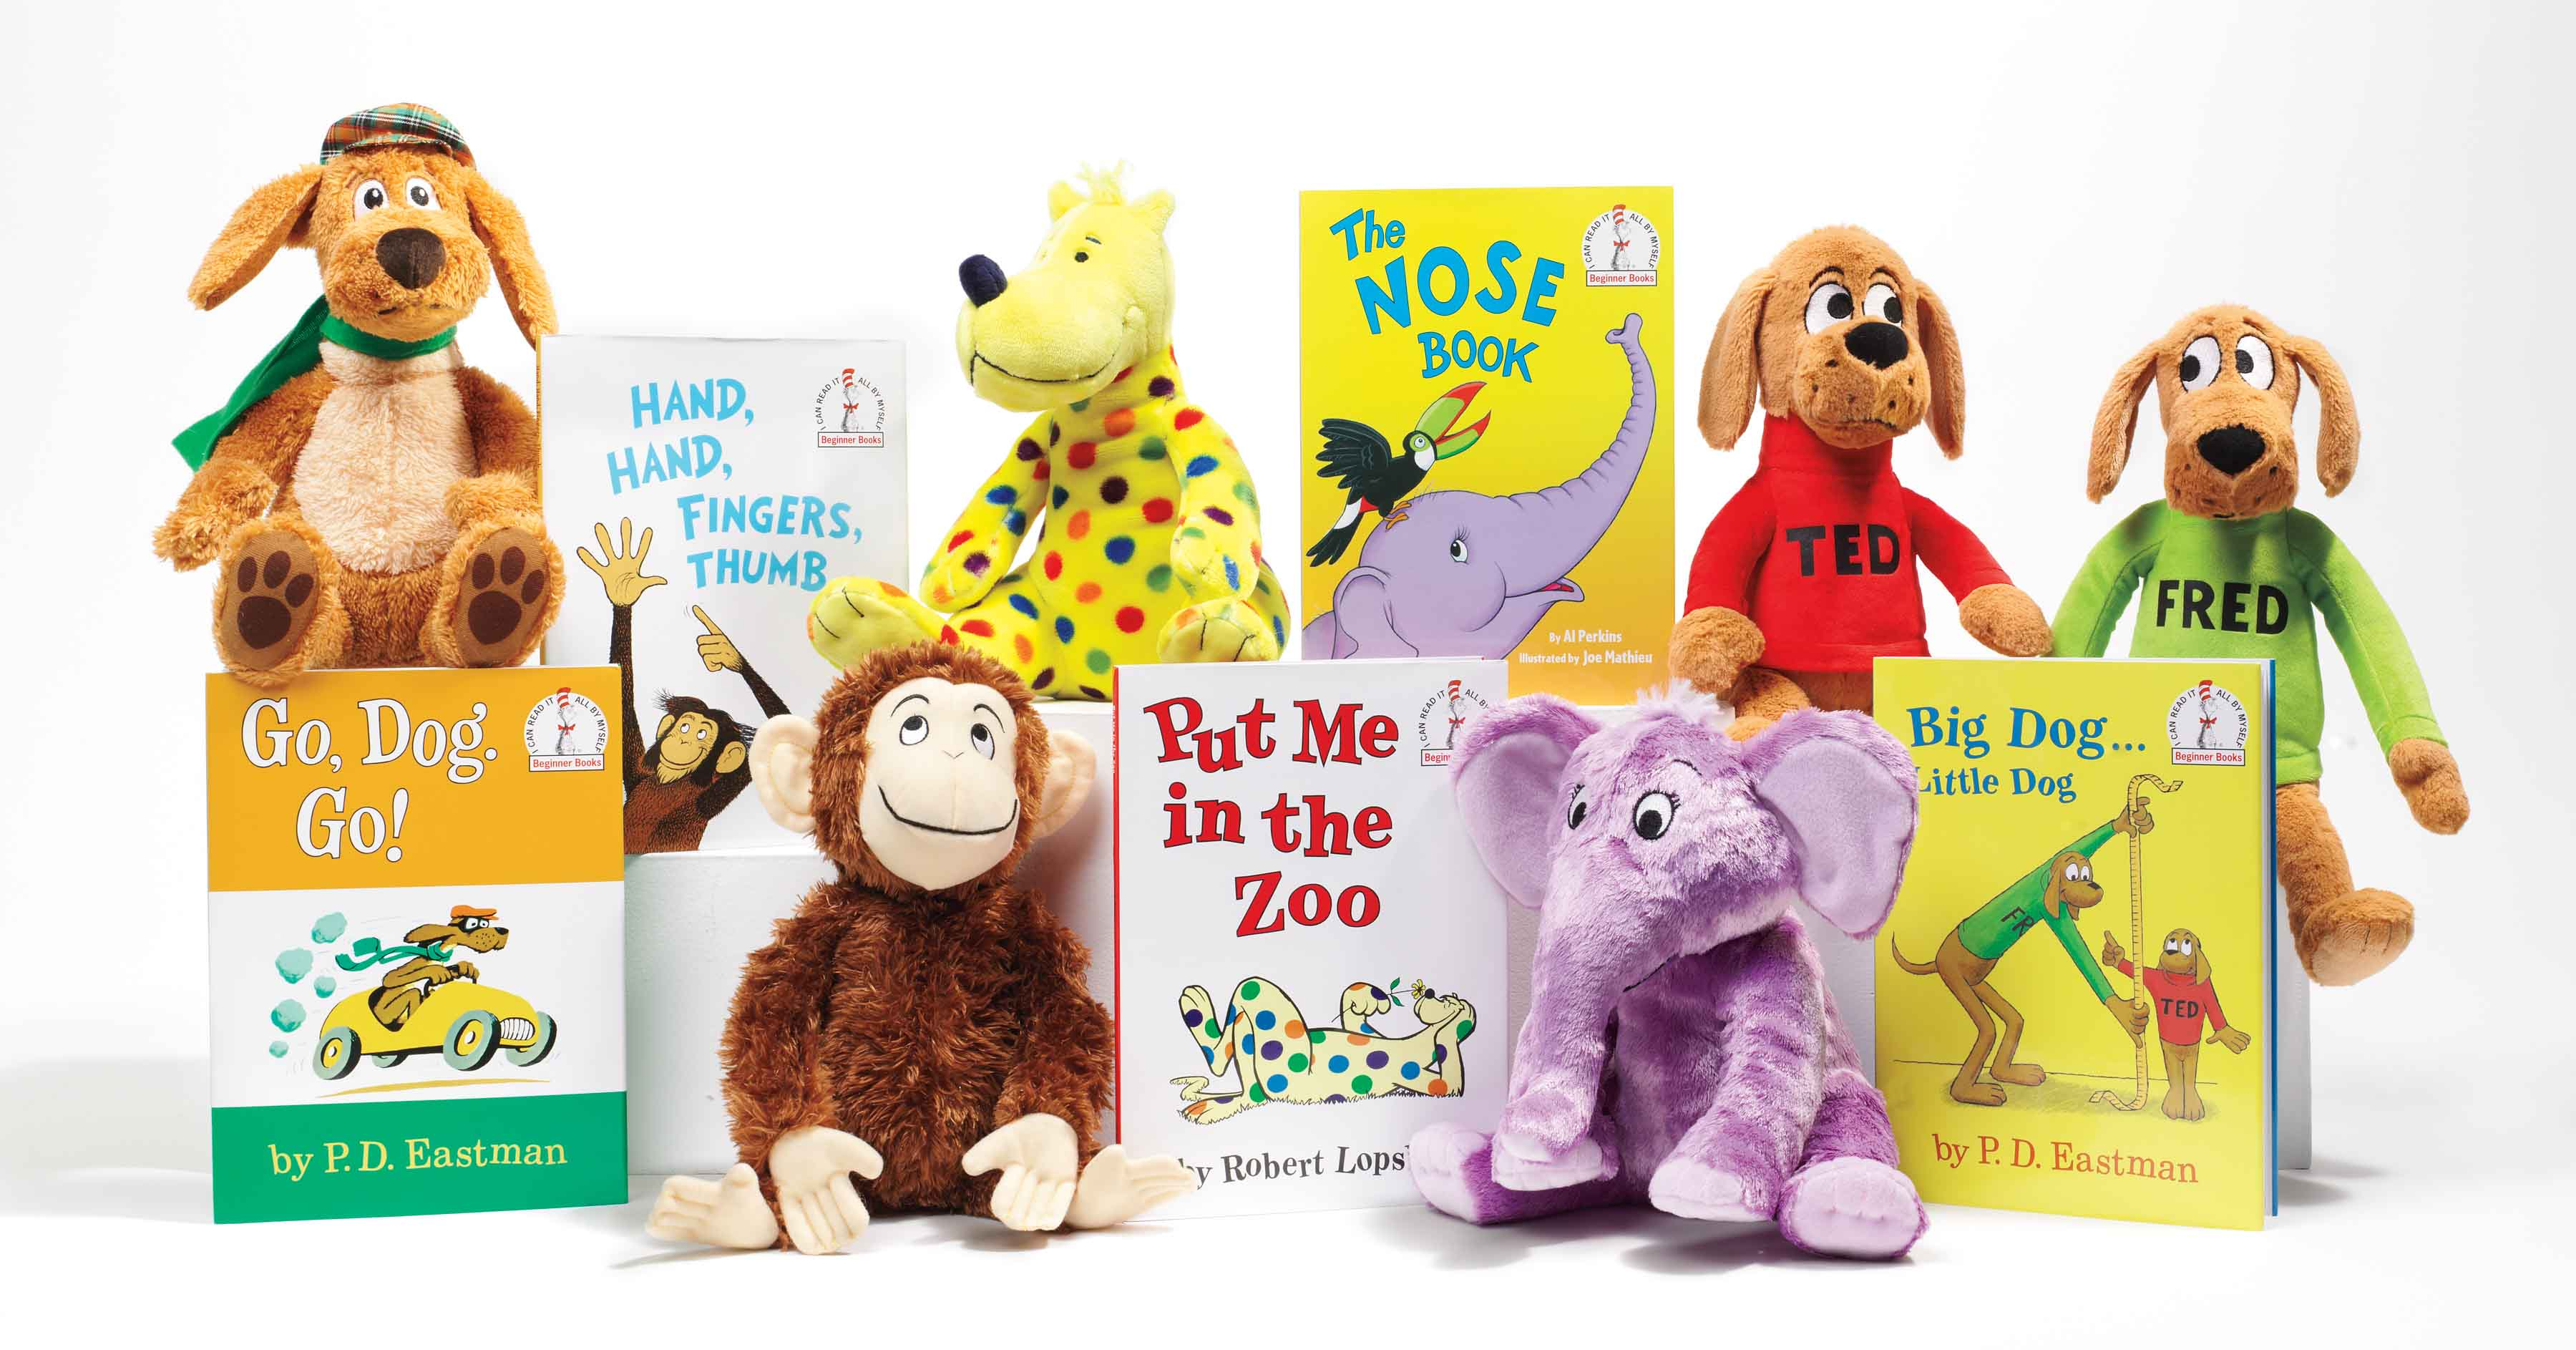 kohls books and stuffed animals 2019